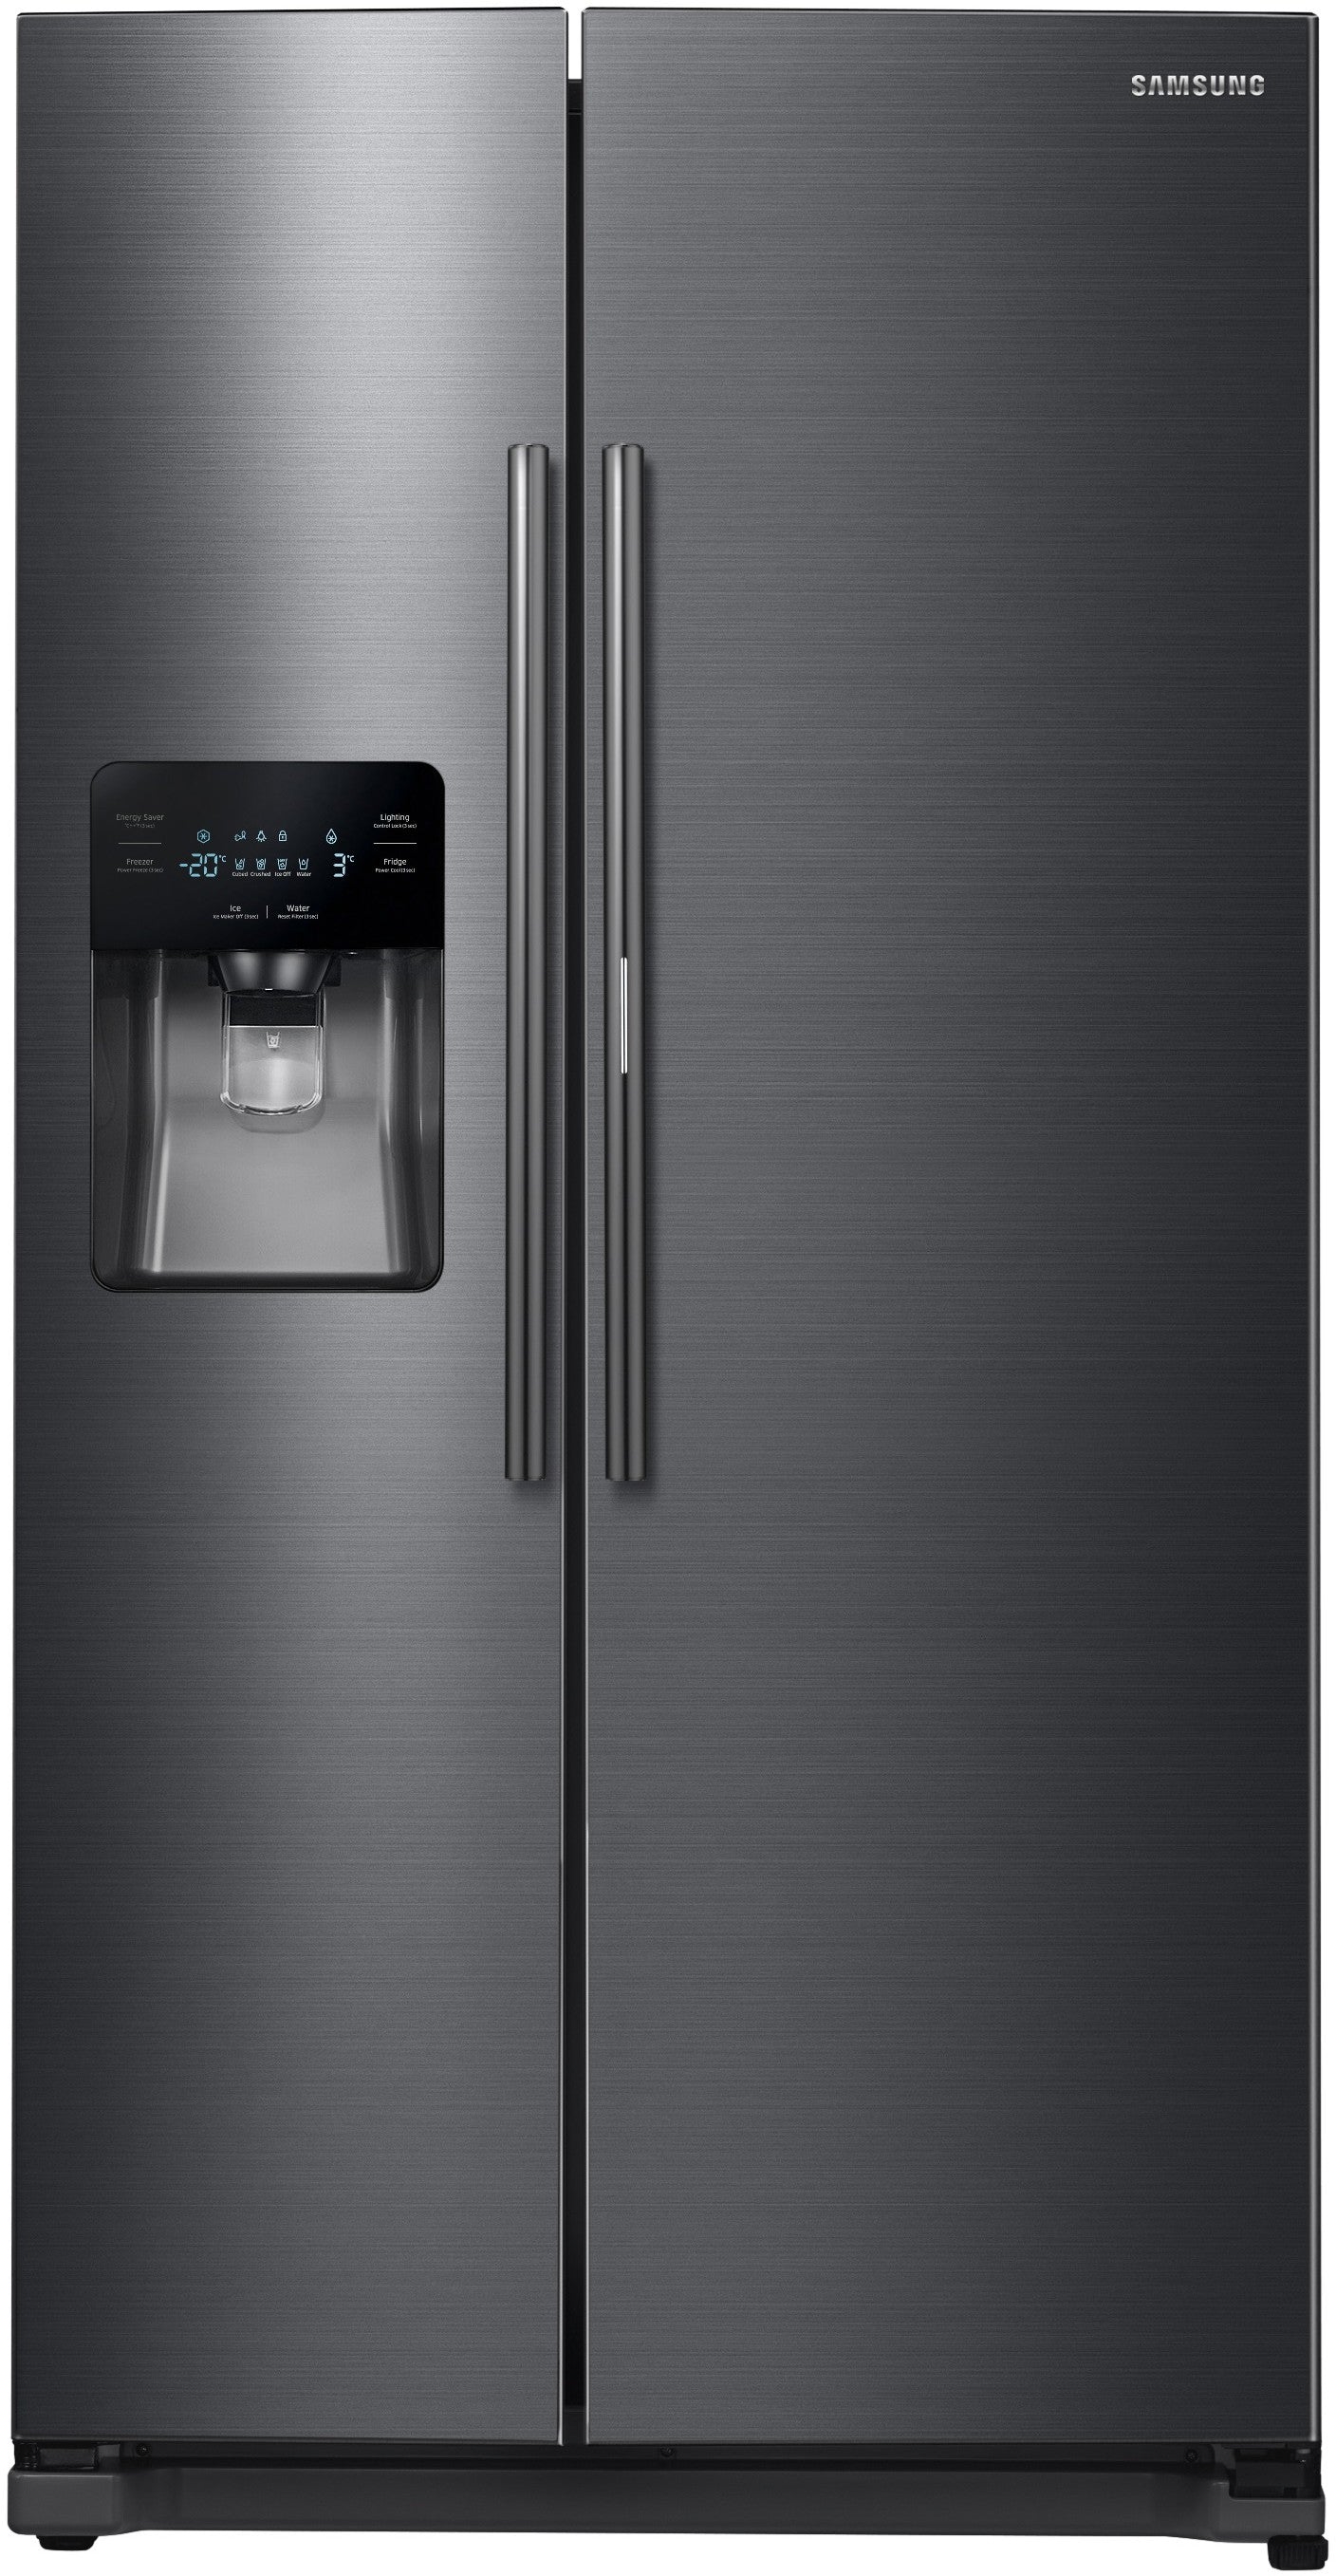 Samsung RH25H5611SG/AA 24.7 Cu. Ft. Side-by-side Refrigerator - Samsung Parts USA